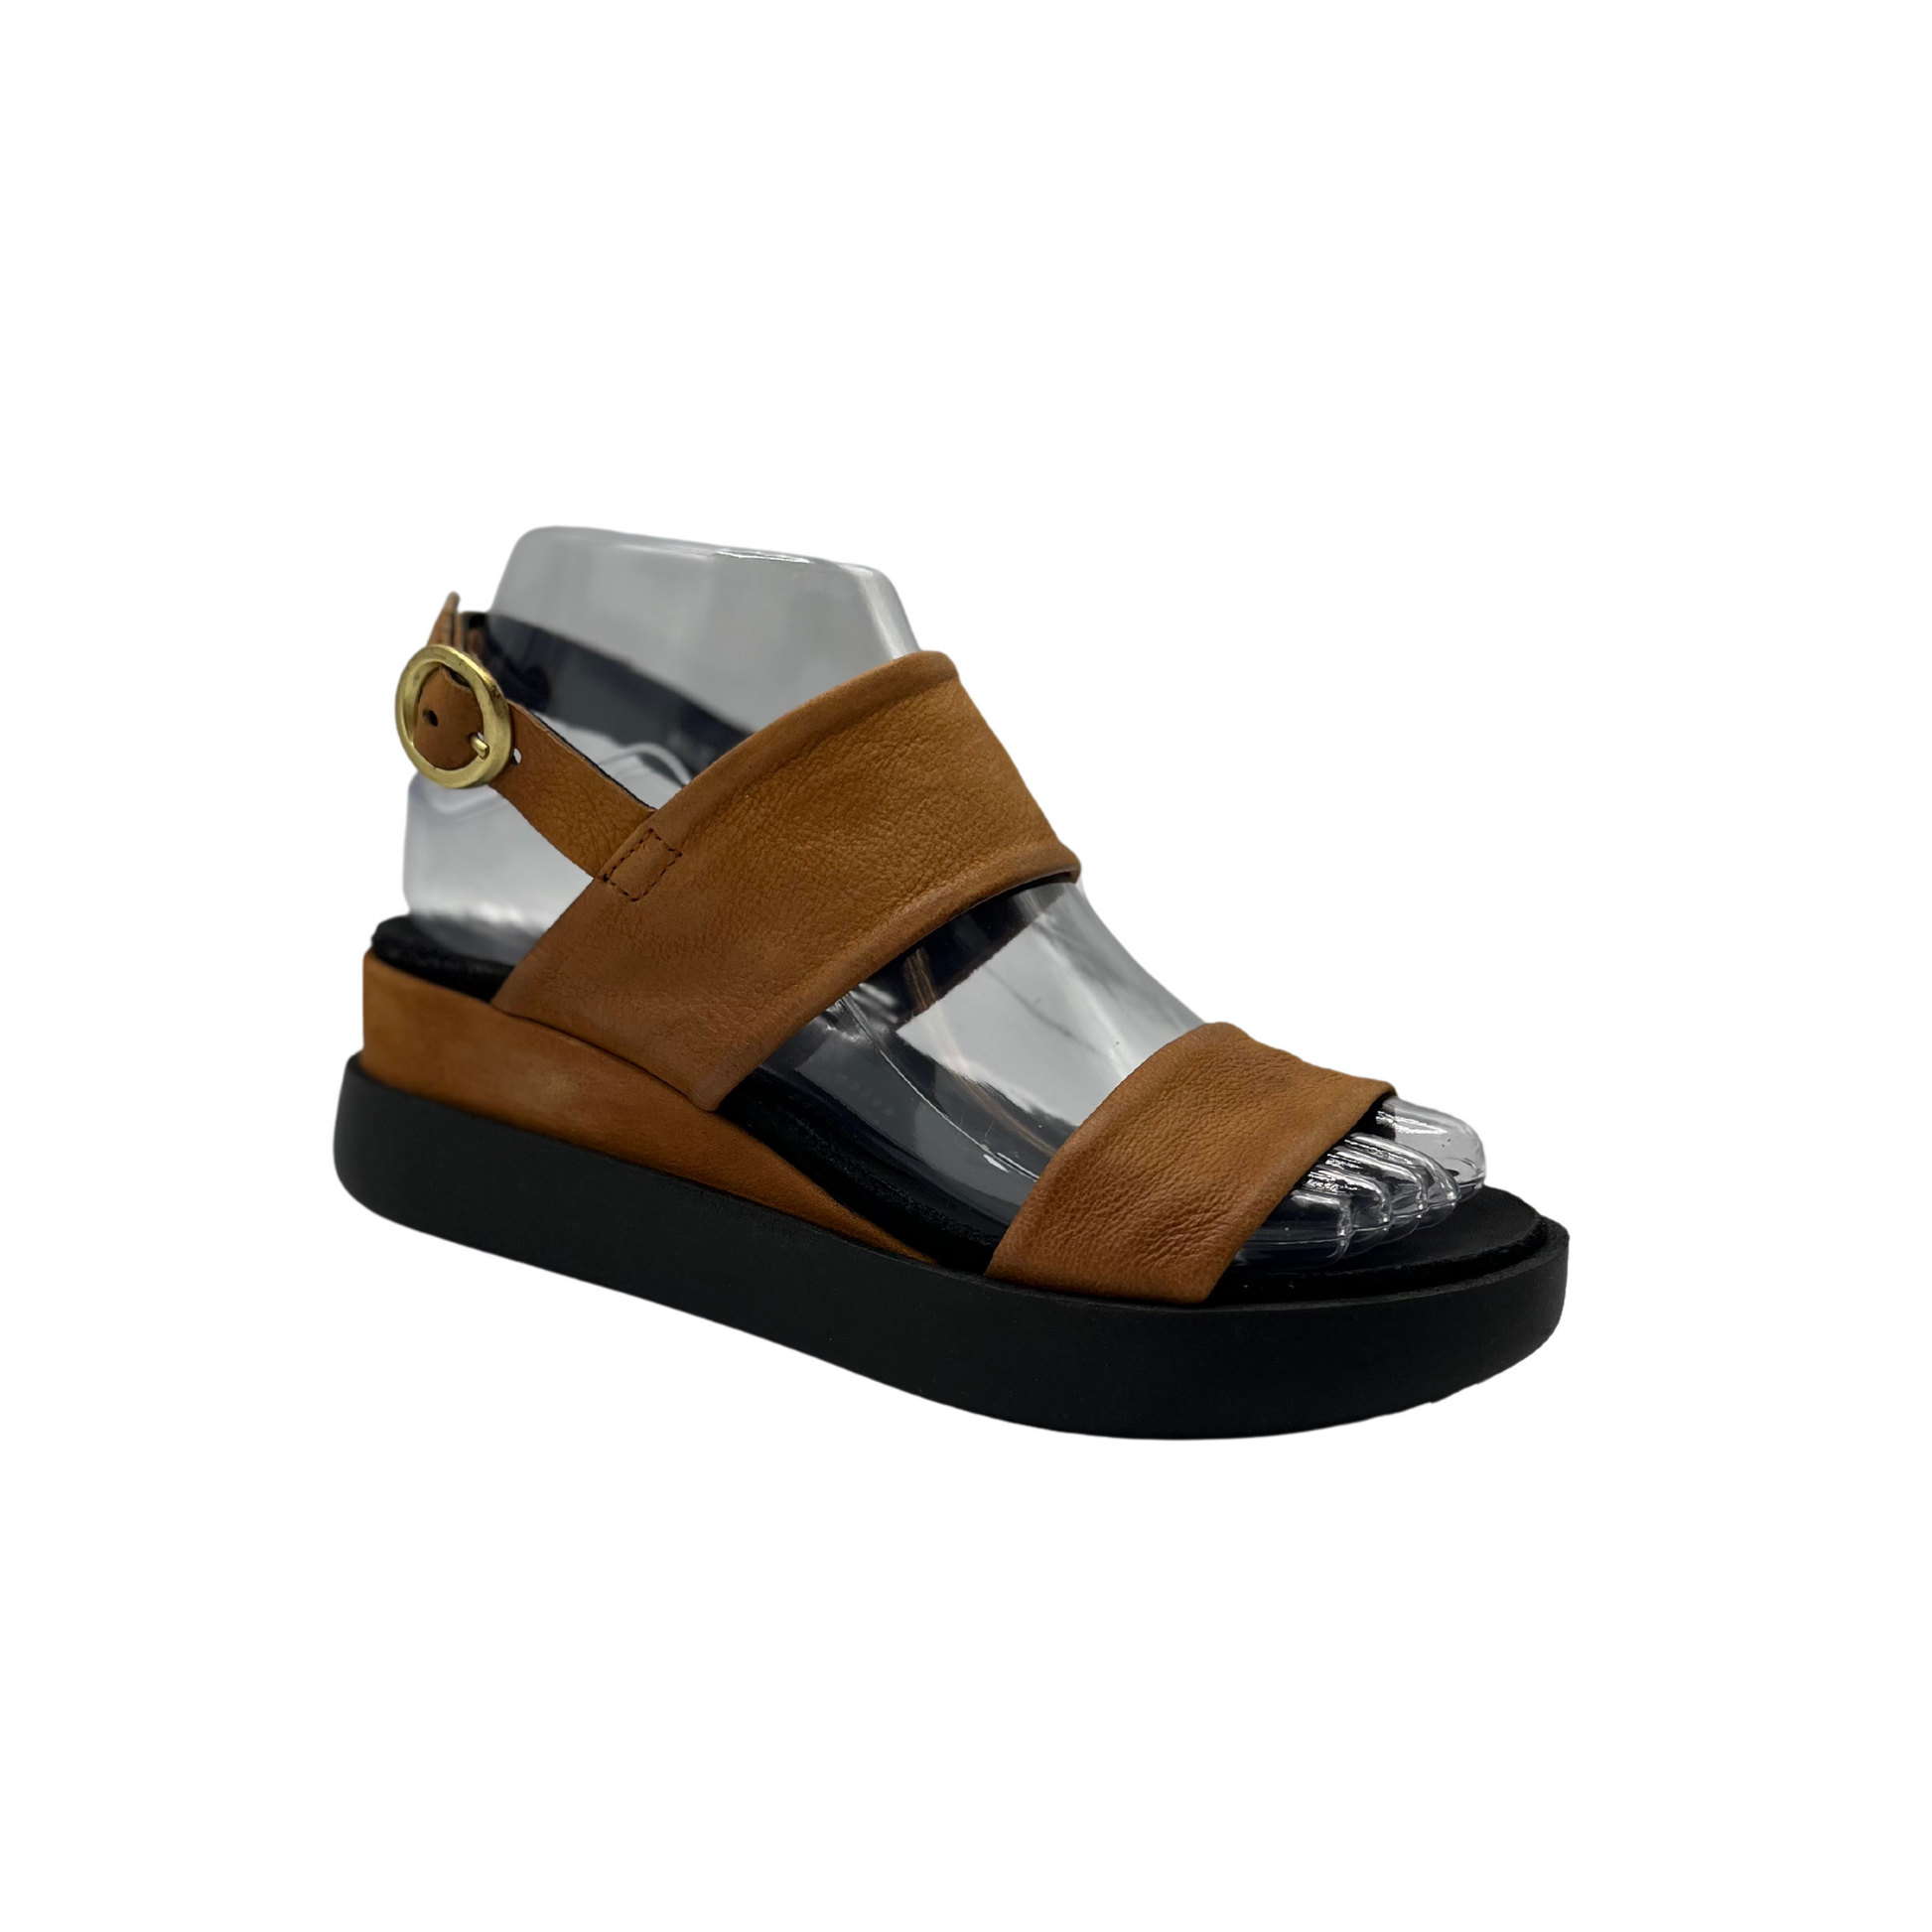 Mjus Tippa platform sandal with slingback strap and gold buckle.